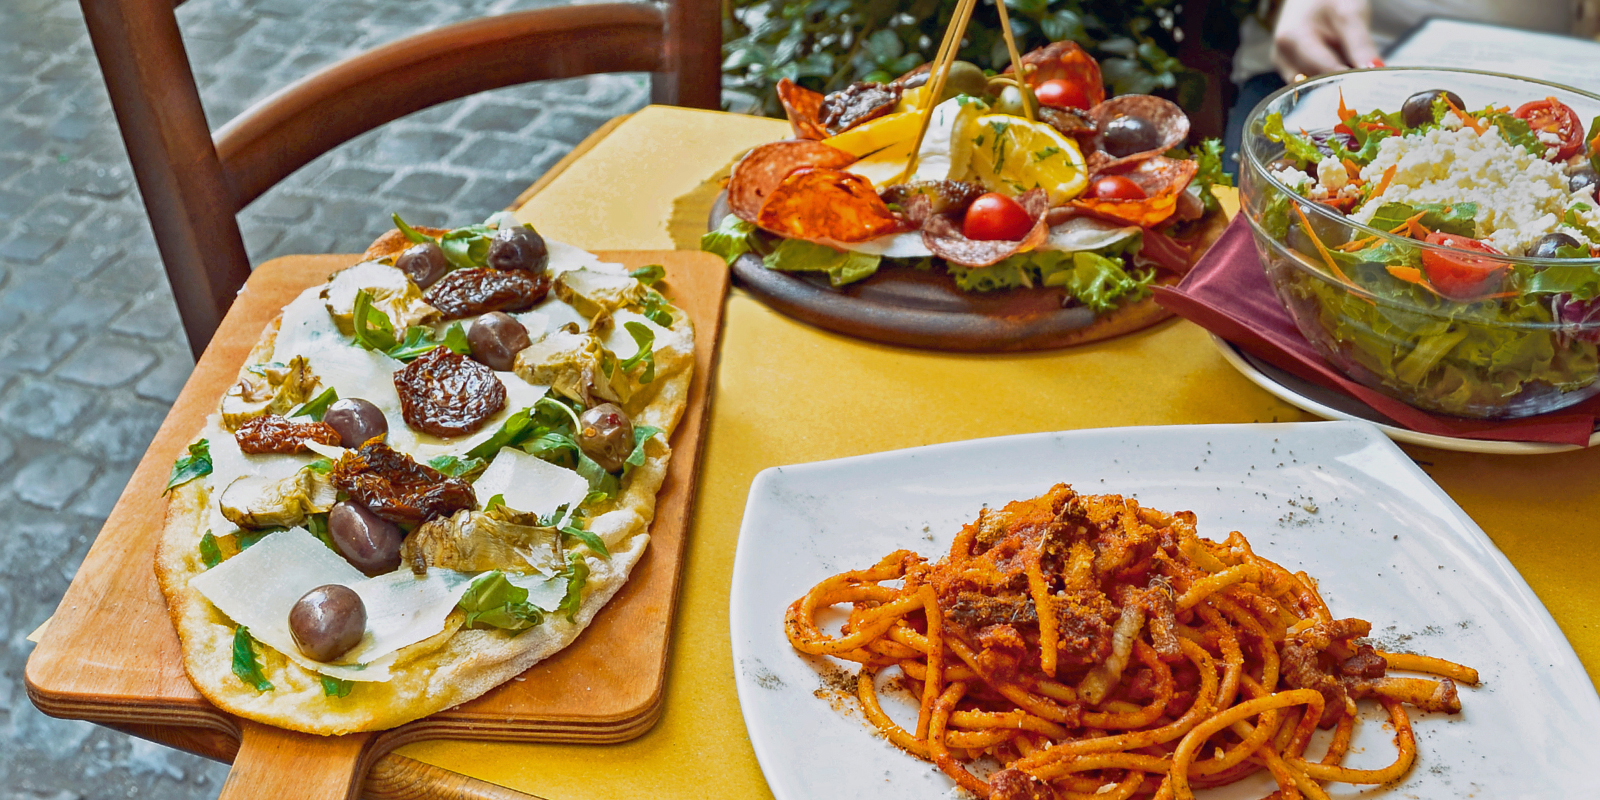 italian culture food